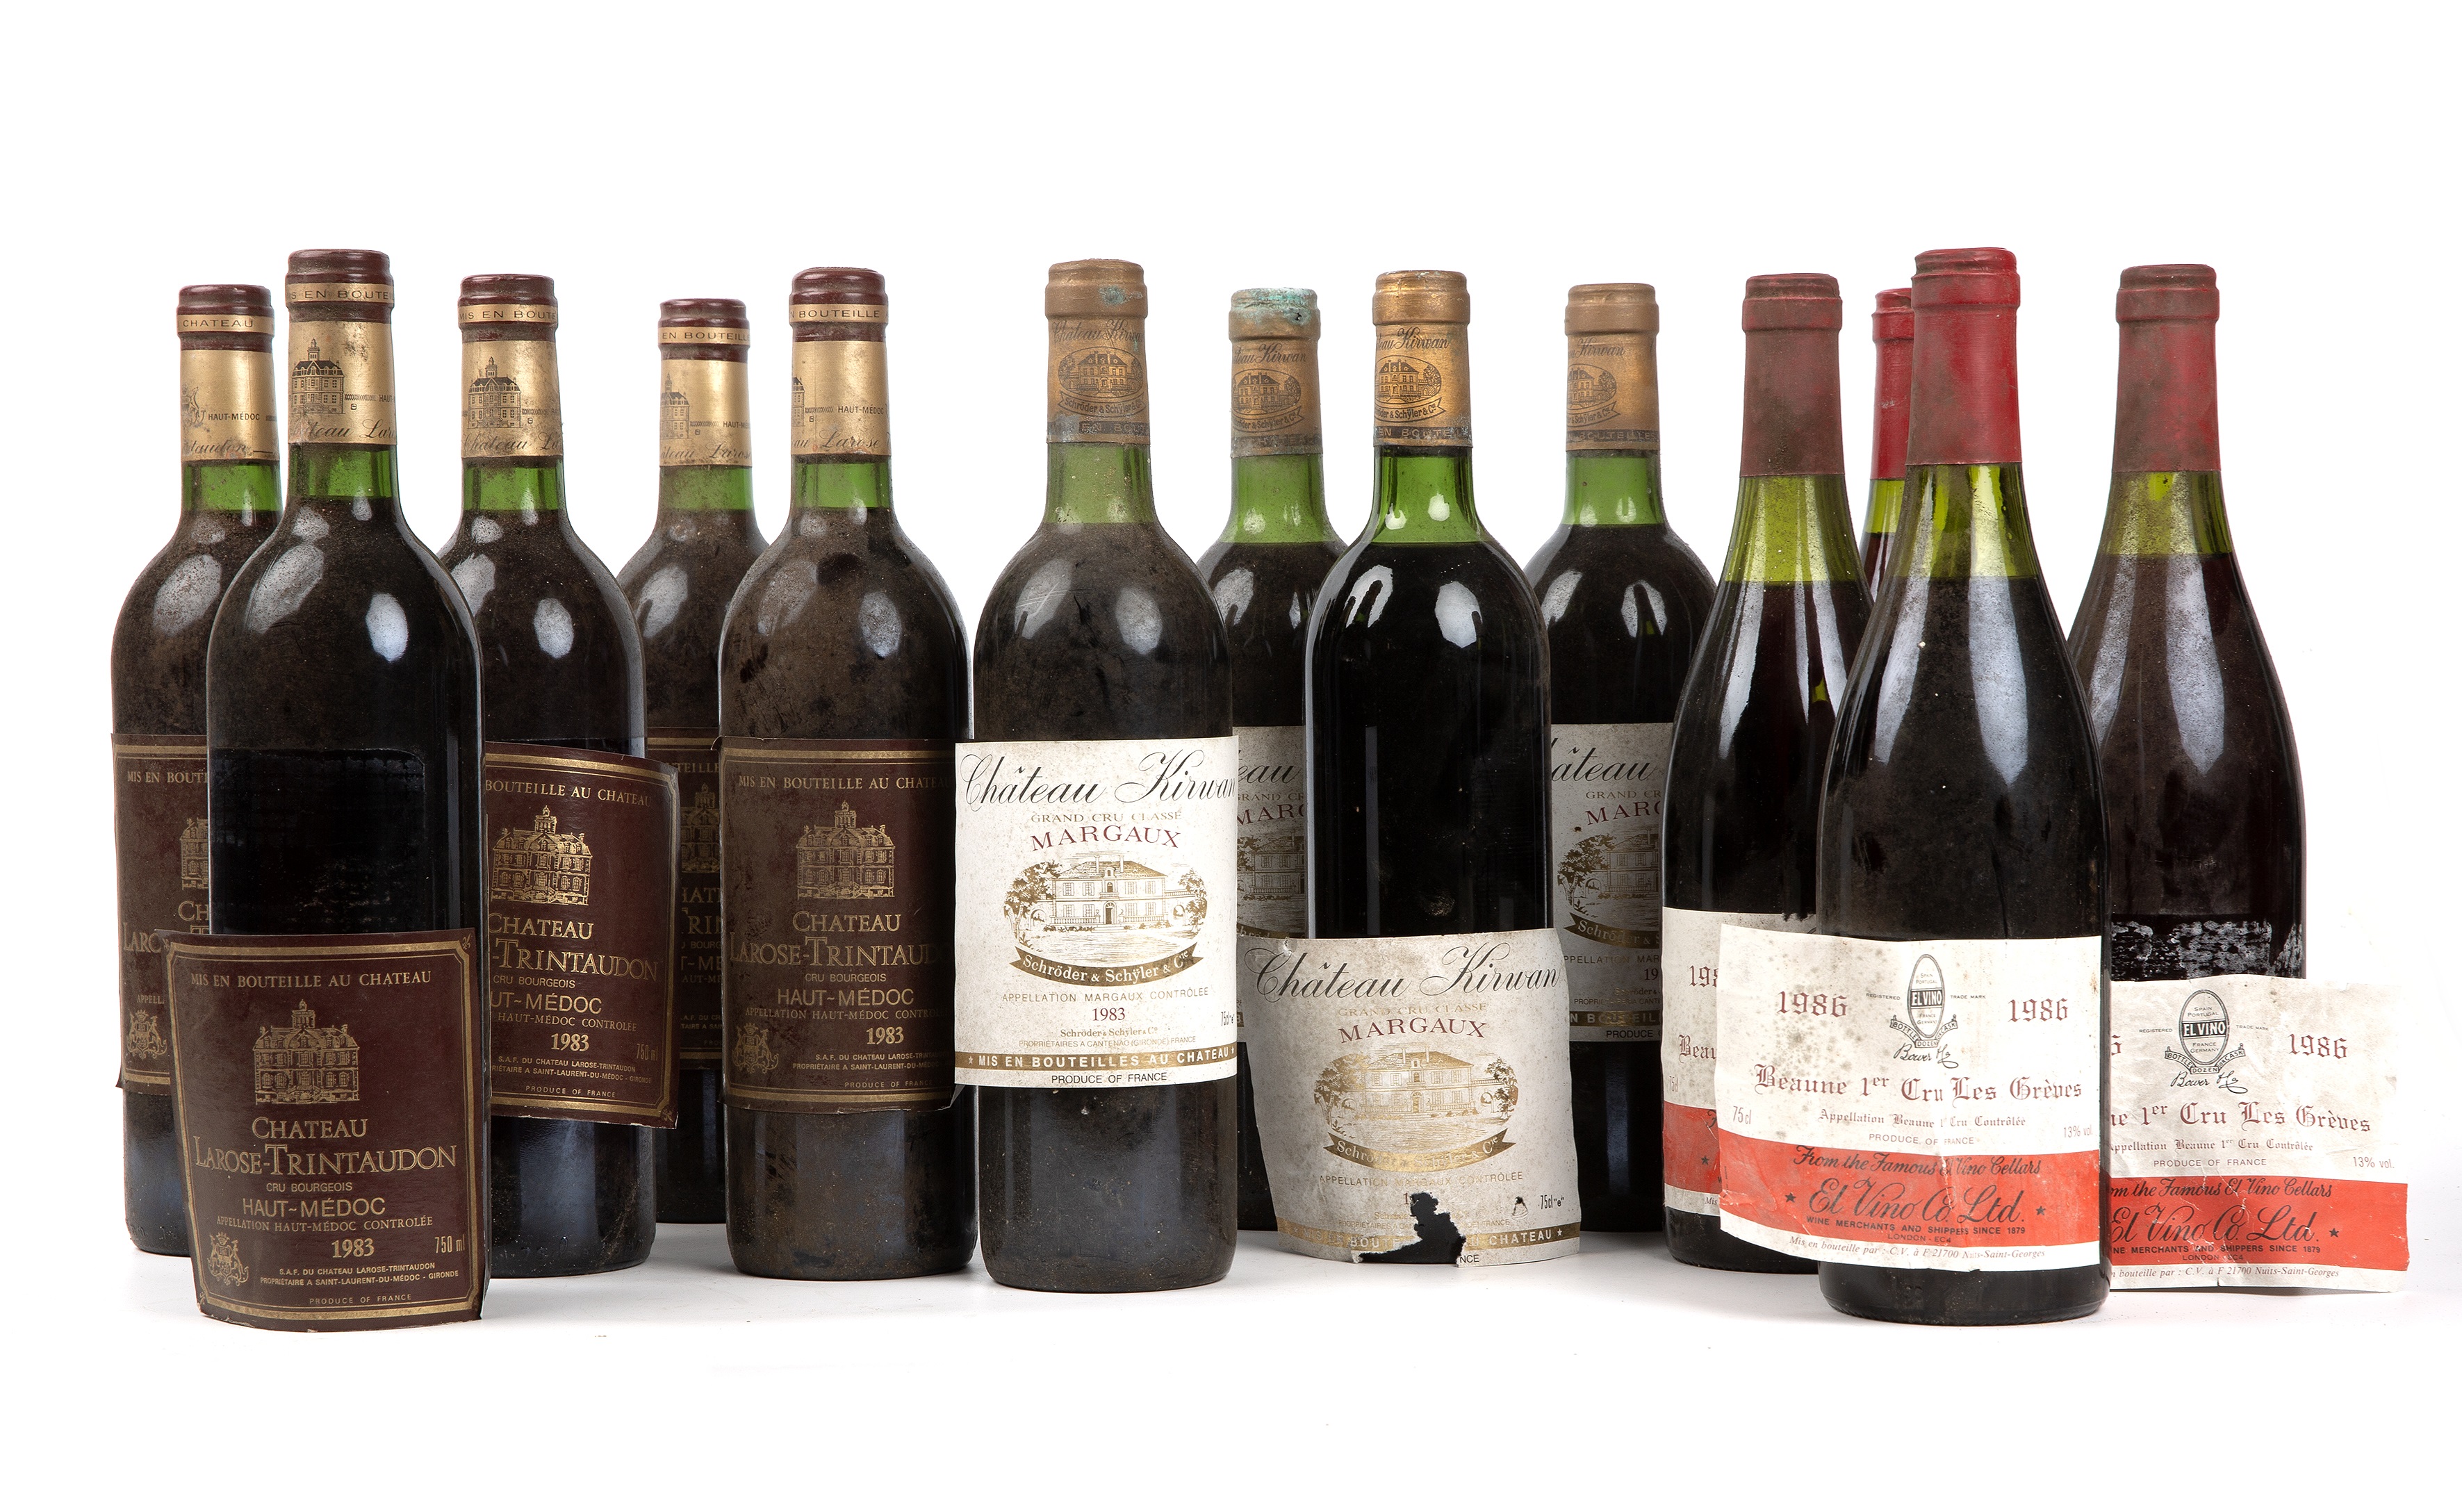 Five bottles of 1983 Chateau Larose Trintaudon, Haut-Medoc, France and four bottles of 1983